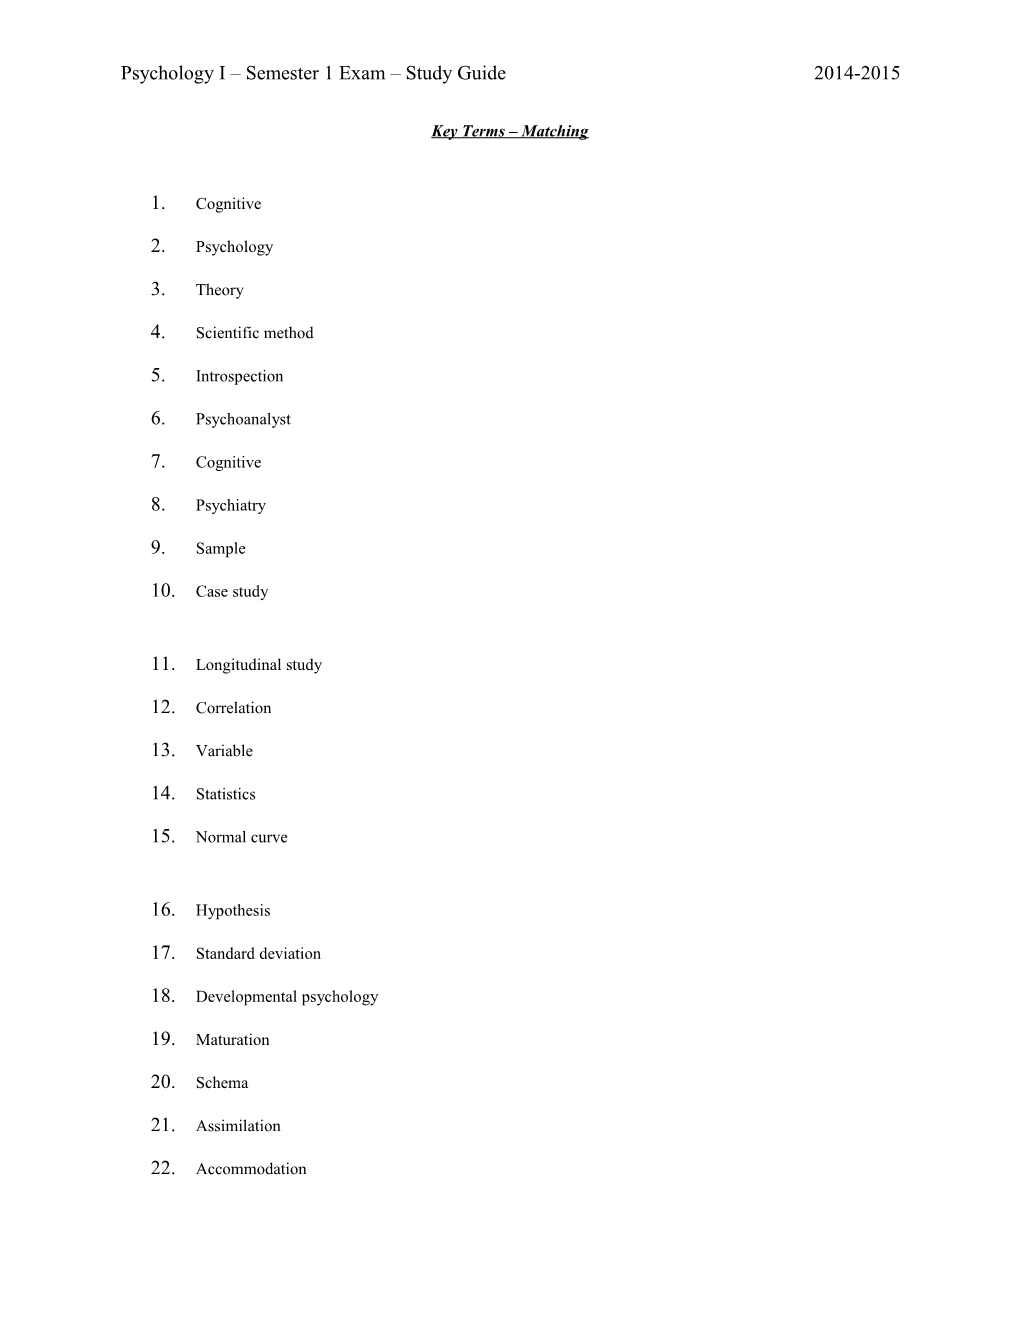 Psychology I Semester 1 Exam Study Guide 2014-2015